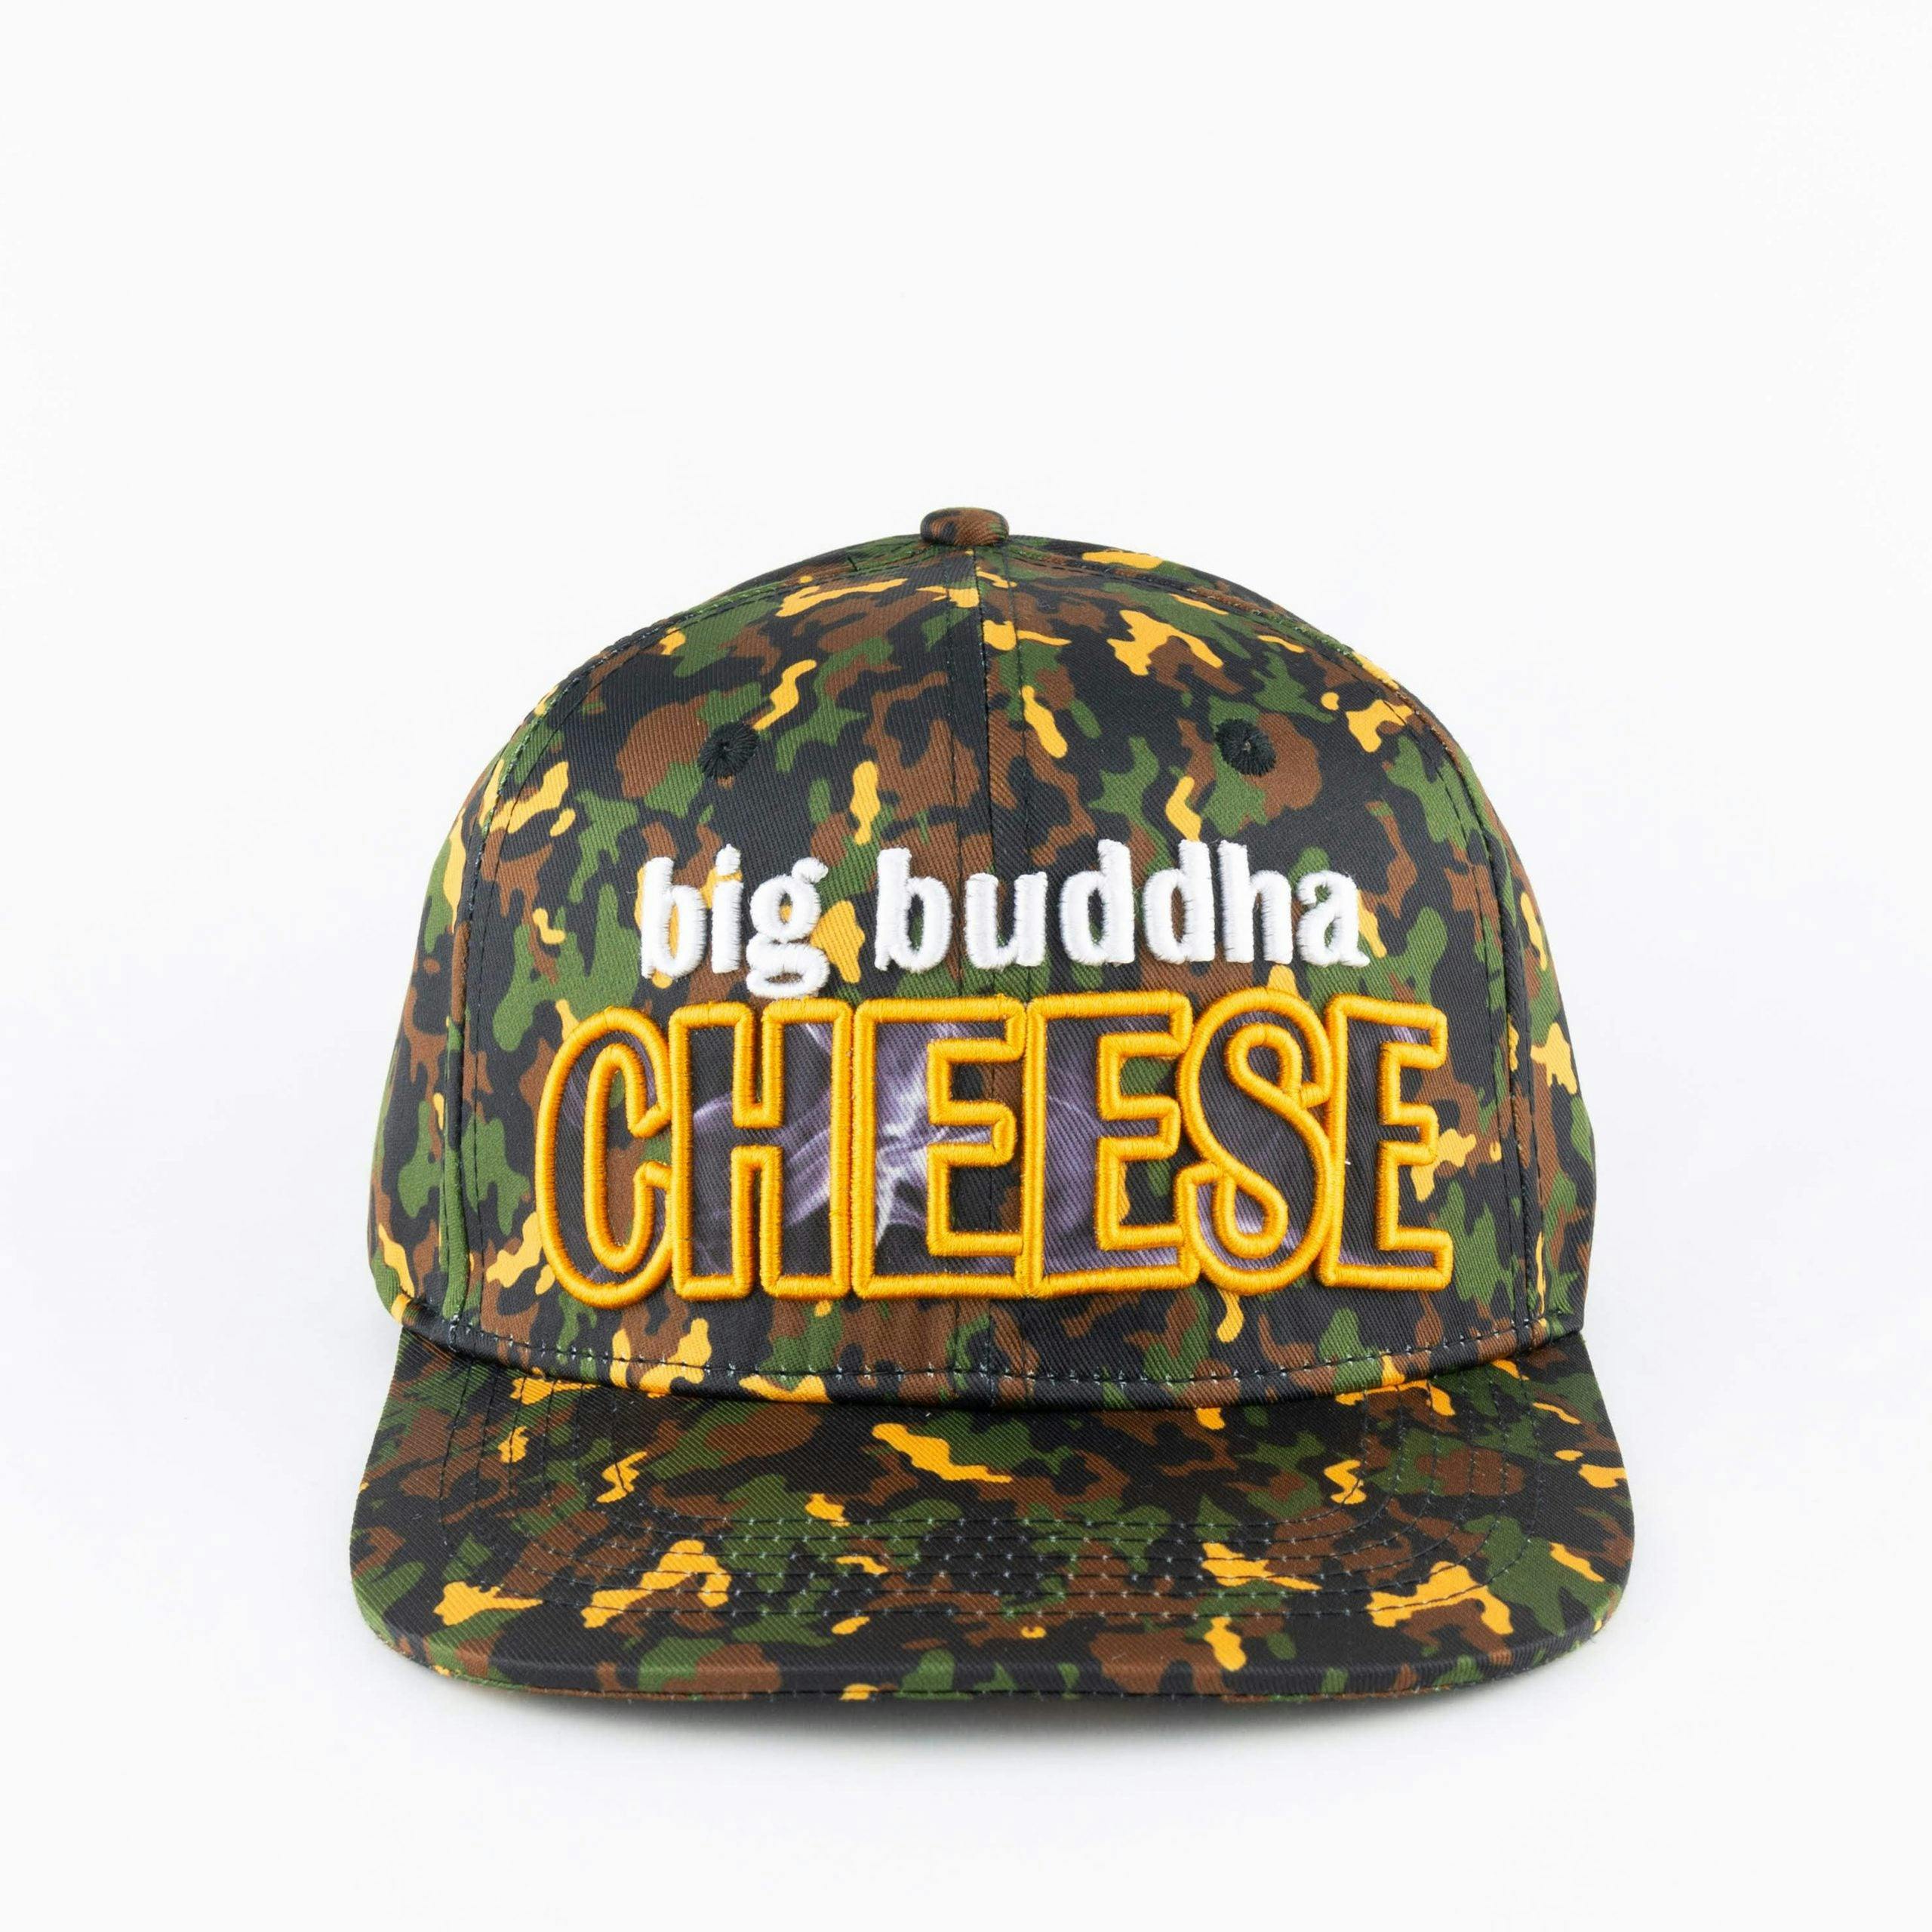 Big Buddha Cheese Cap